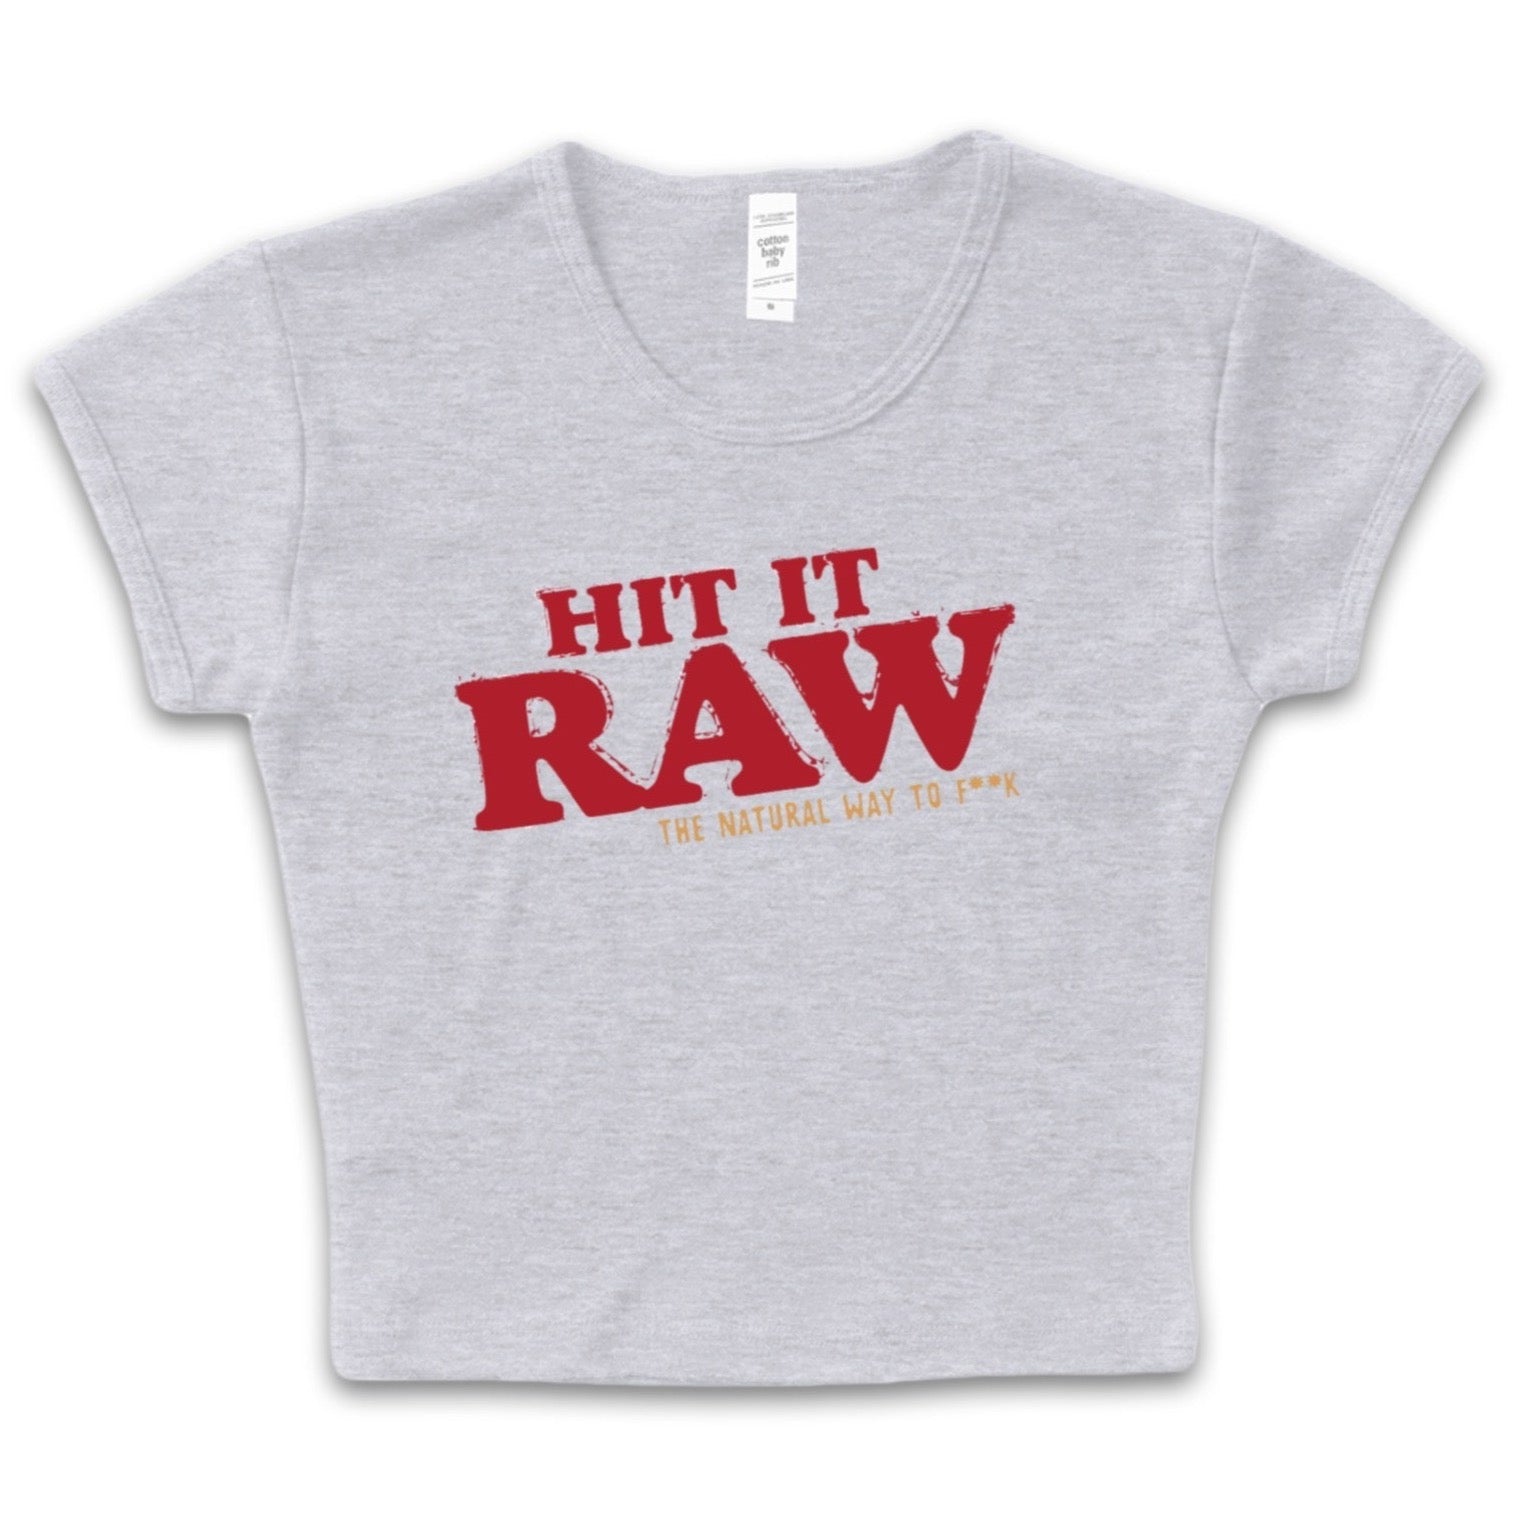 Hit It Raw Baby Tee